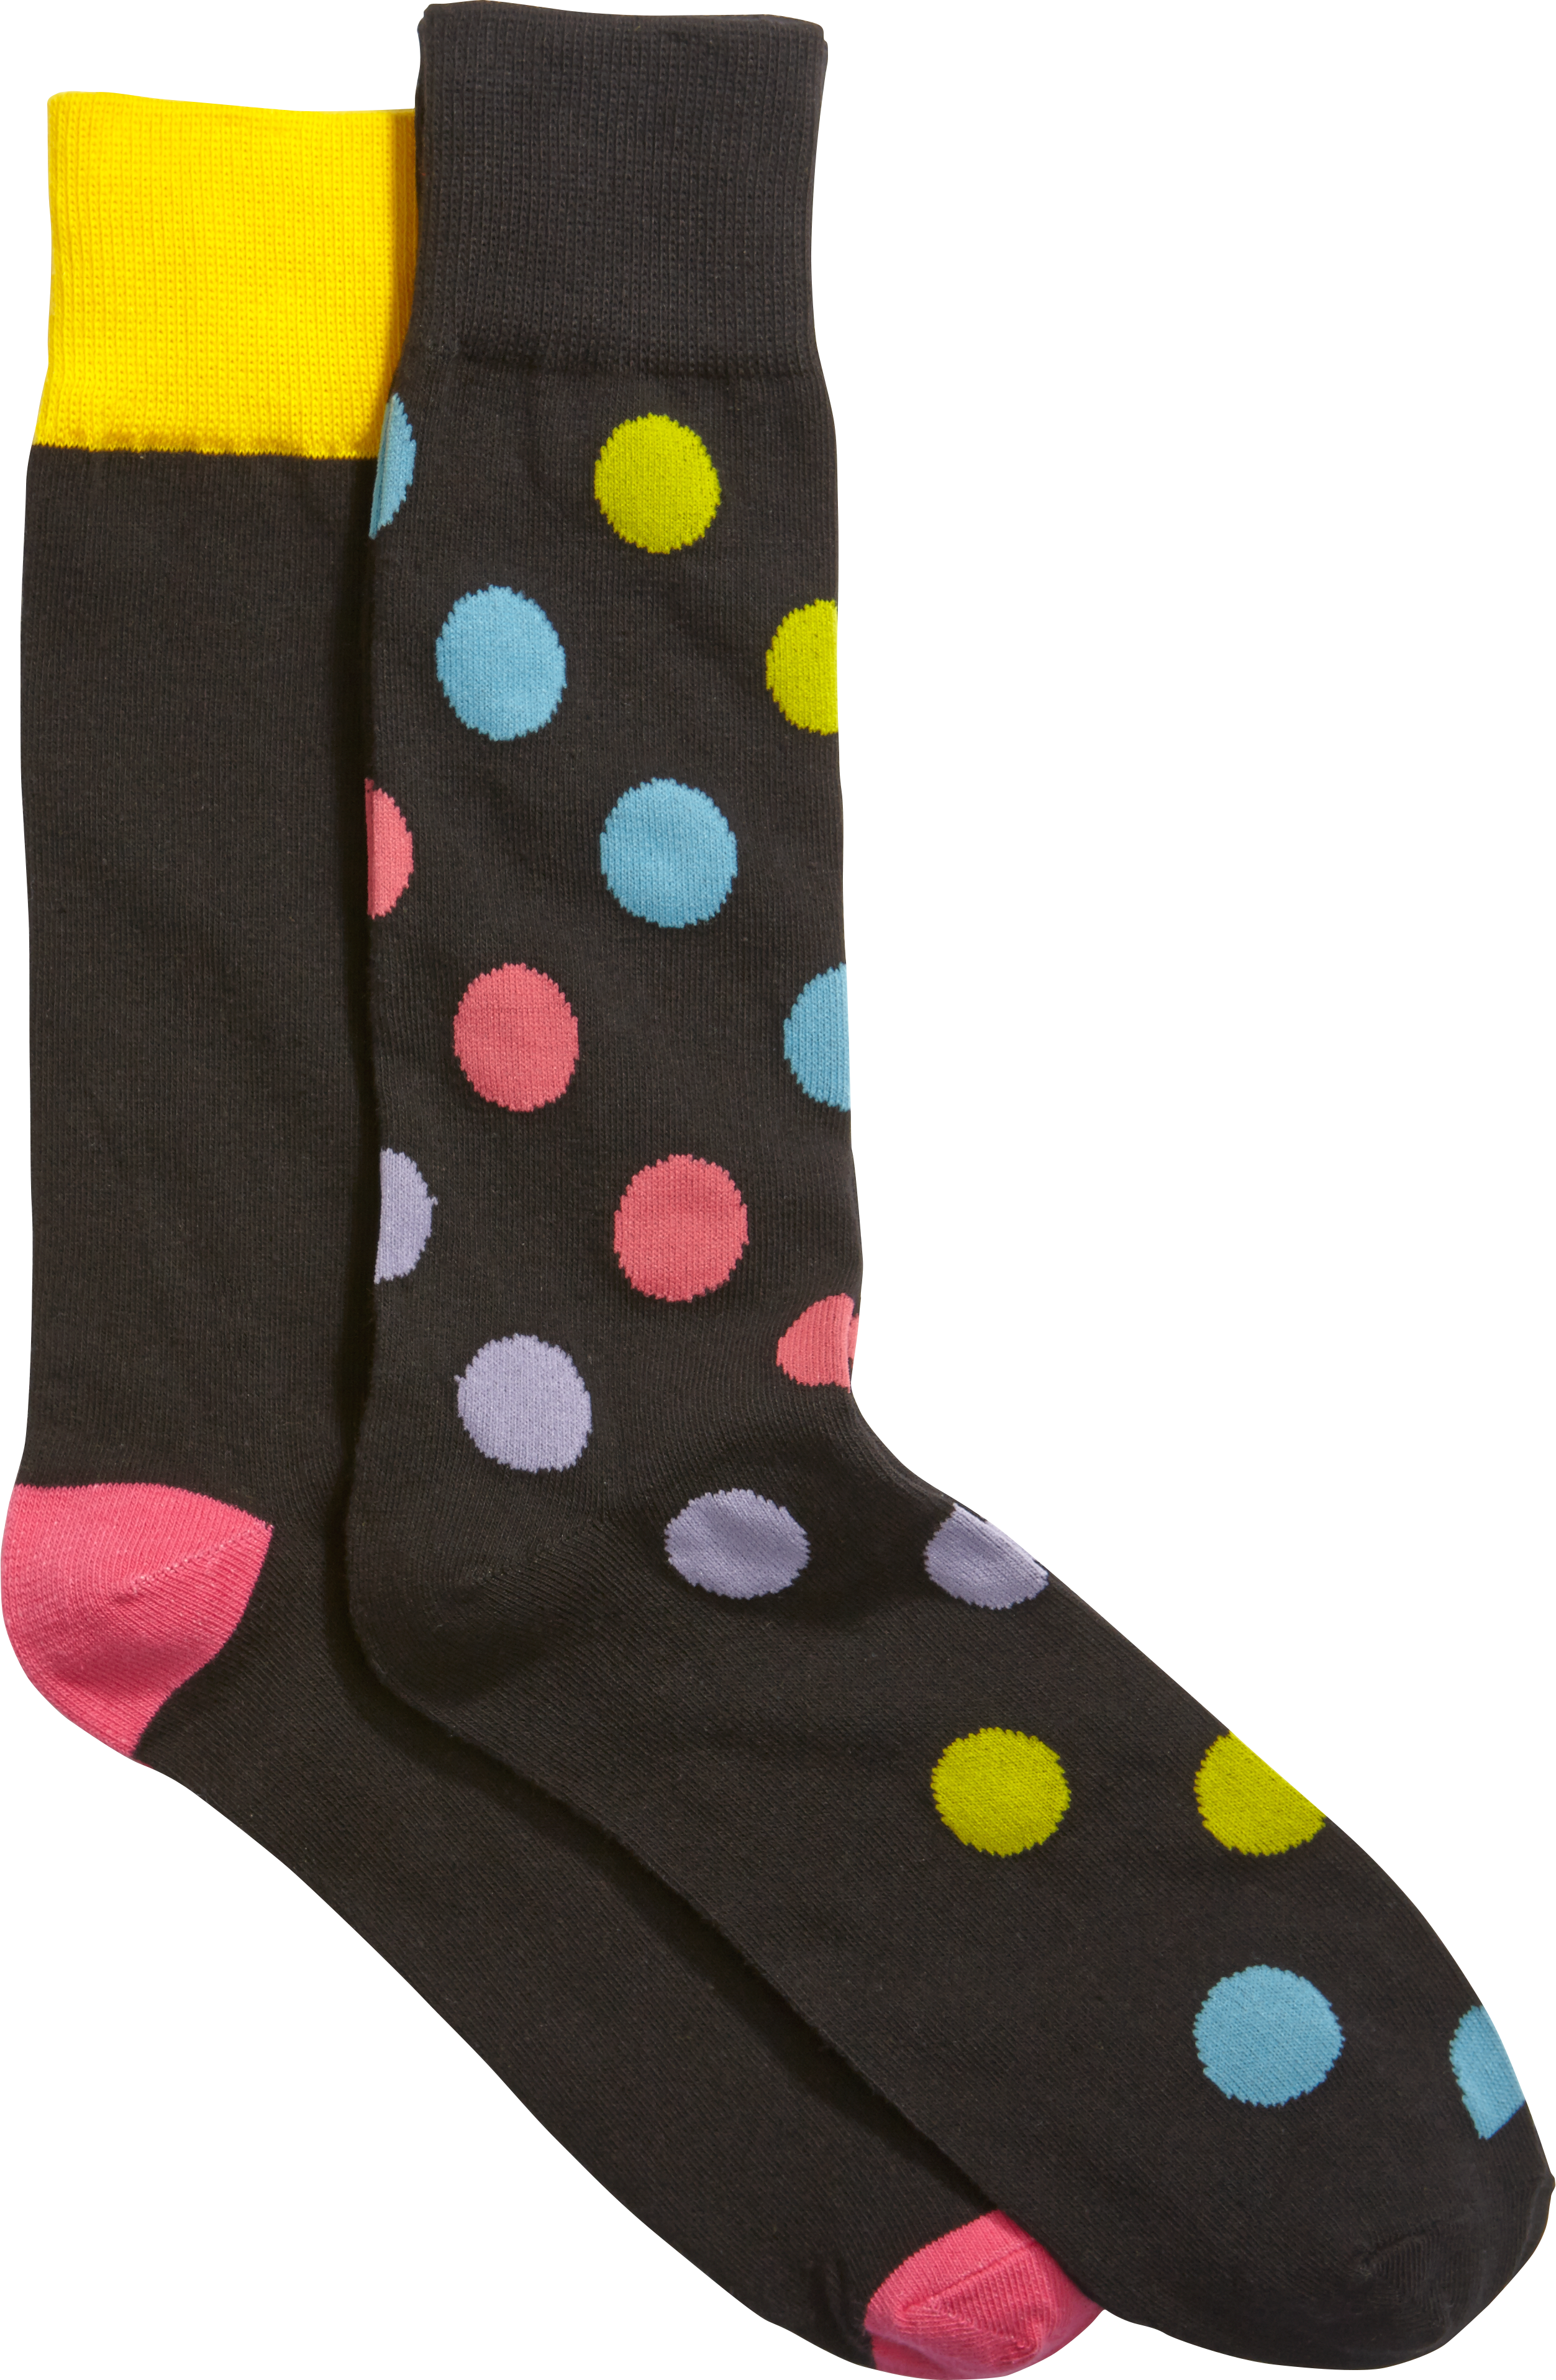 Egara Black Polka Dot Fashion Socks (Two Pack) - Men's Sale | Men's ...